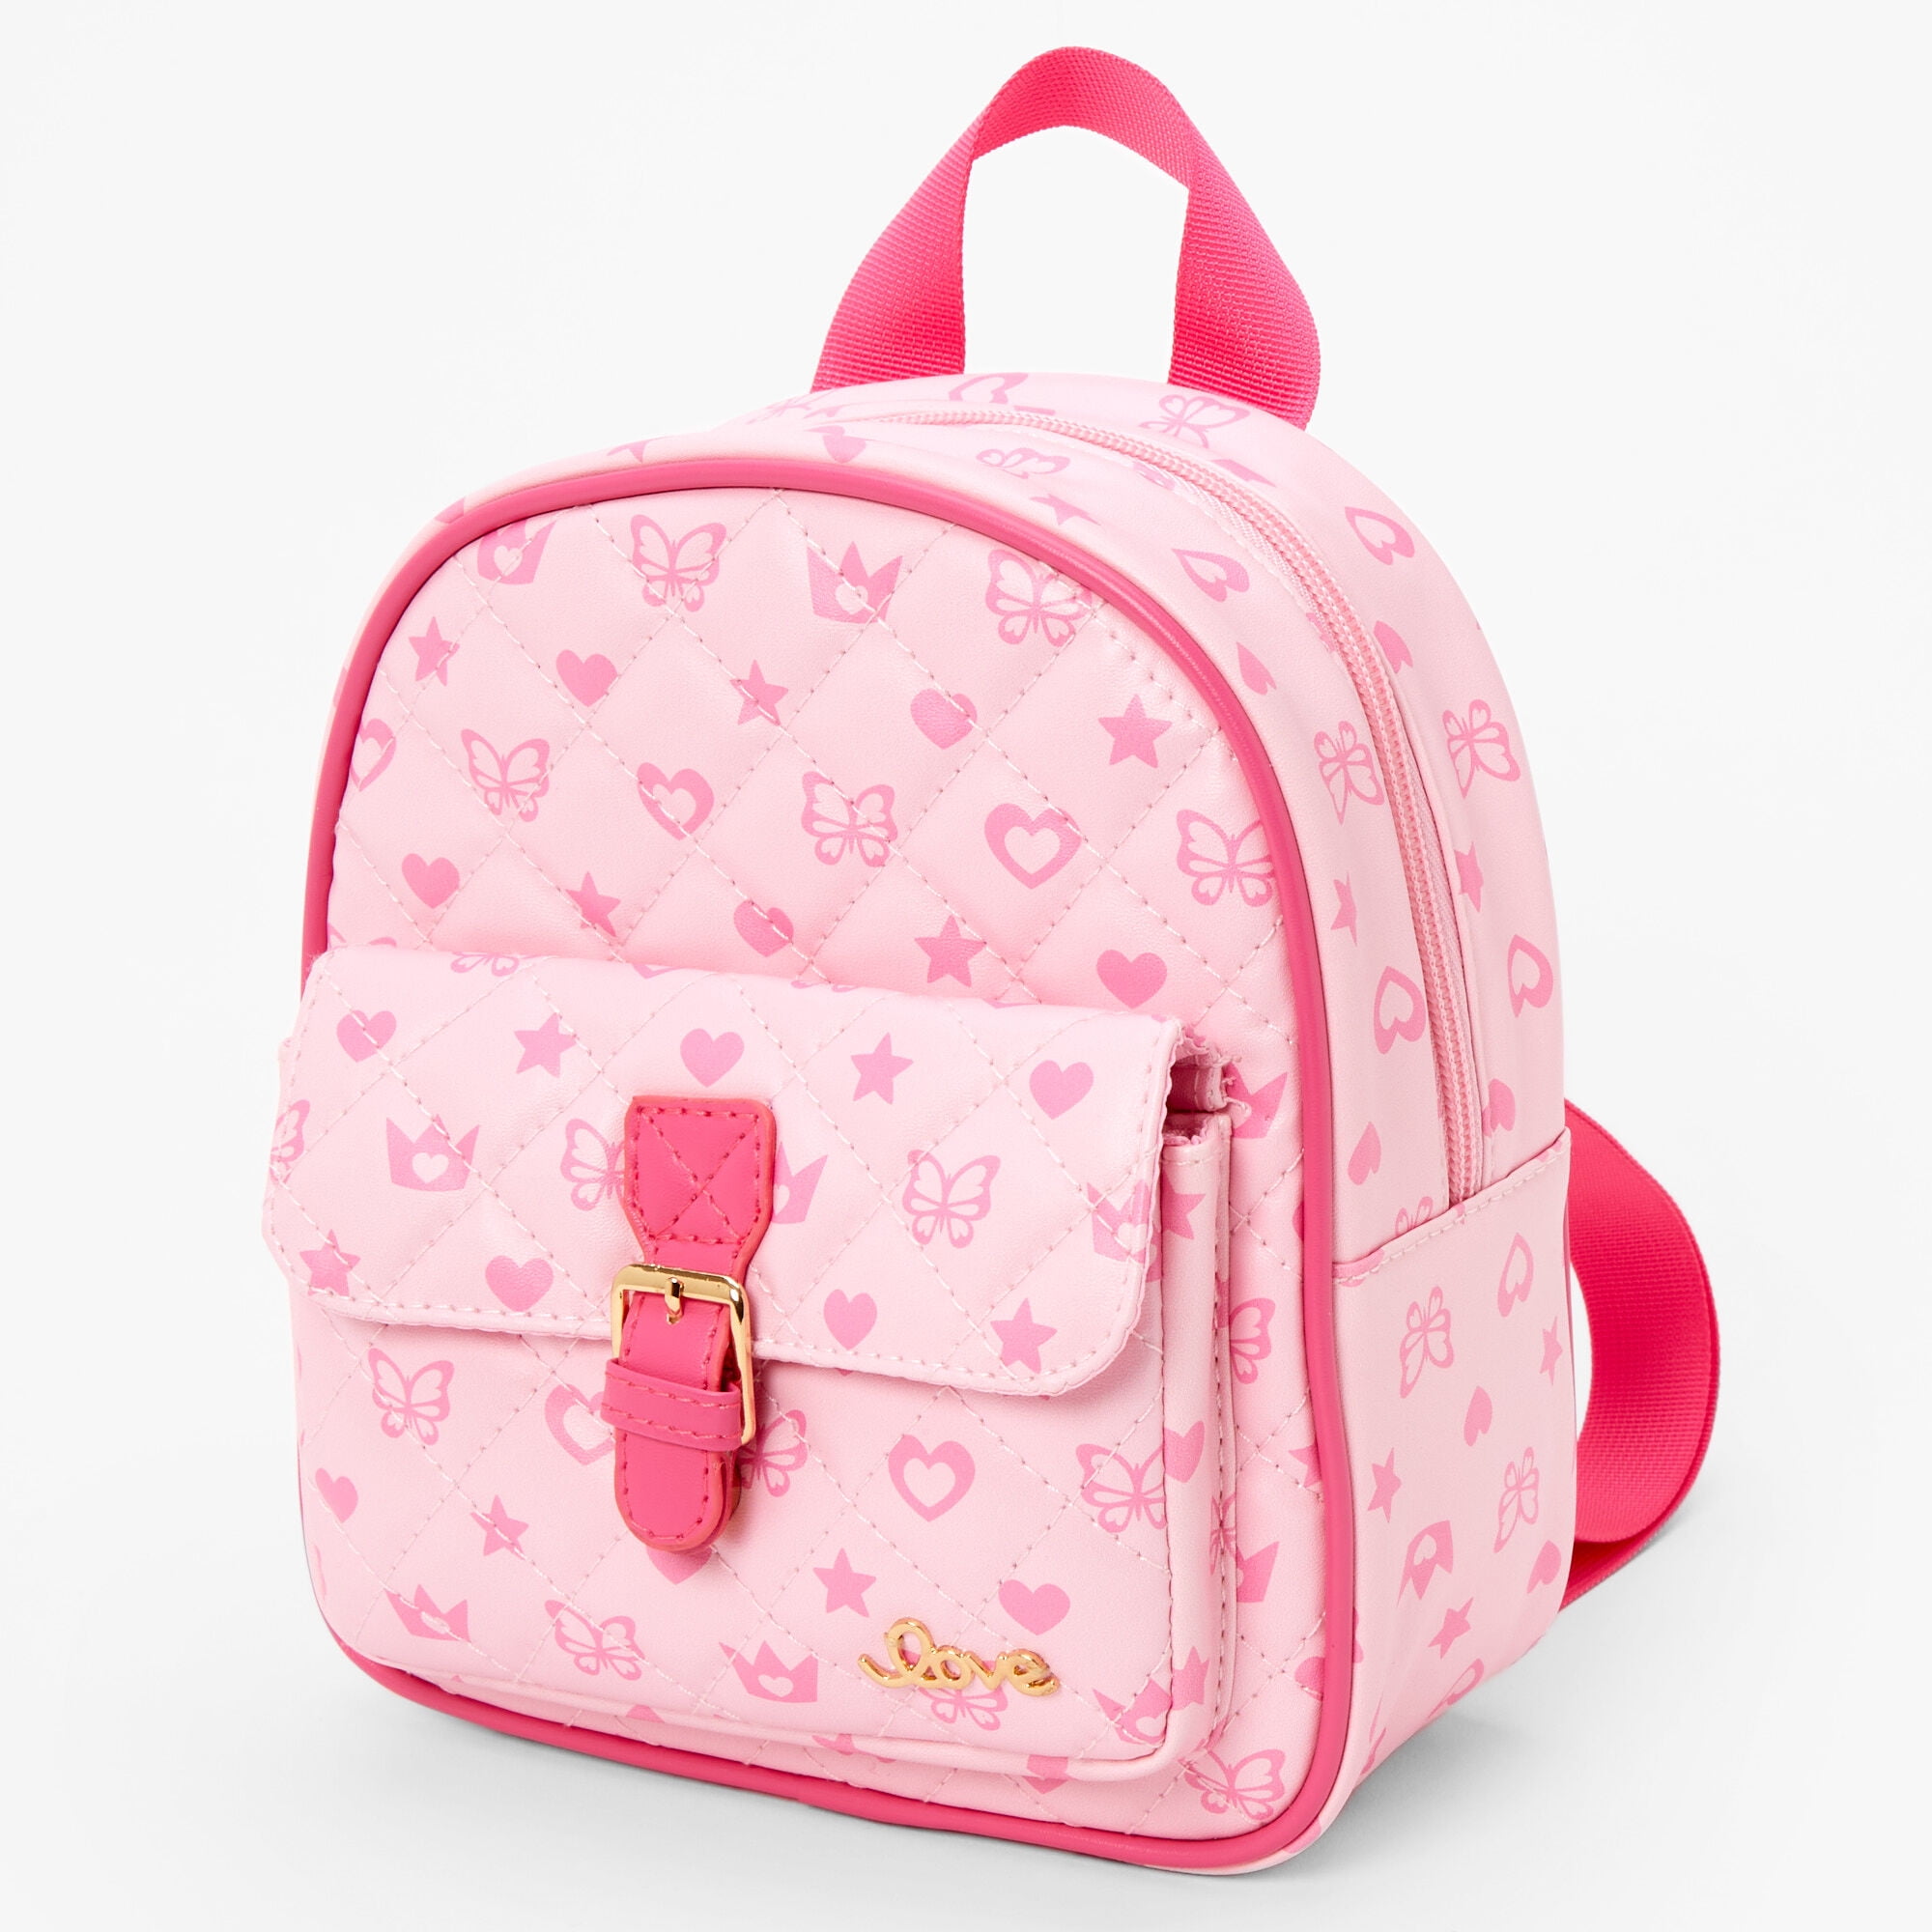 FANCY Lovely Baby Girls Mini Messenger Bag Cute Cartoon Kids Baby Small  Coin Purses Children Handbags Shoulder Bags - Walmart.com